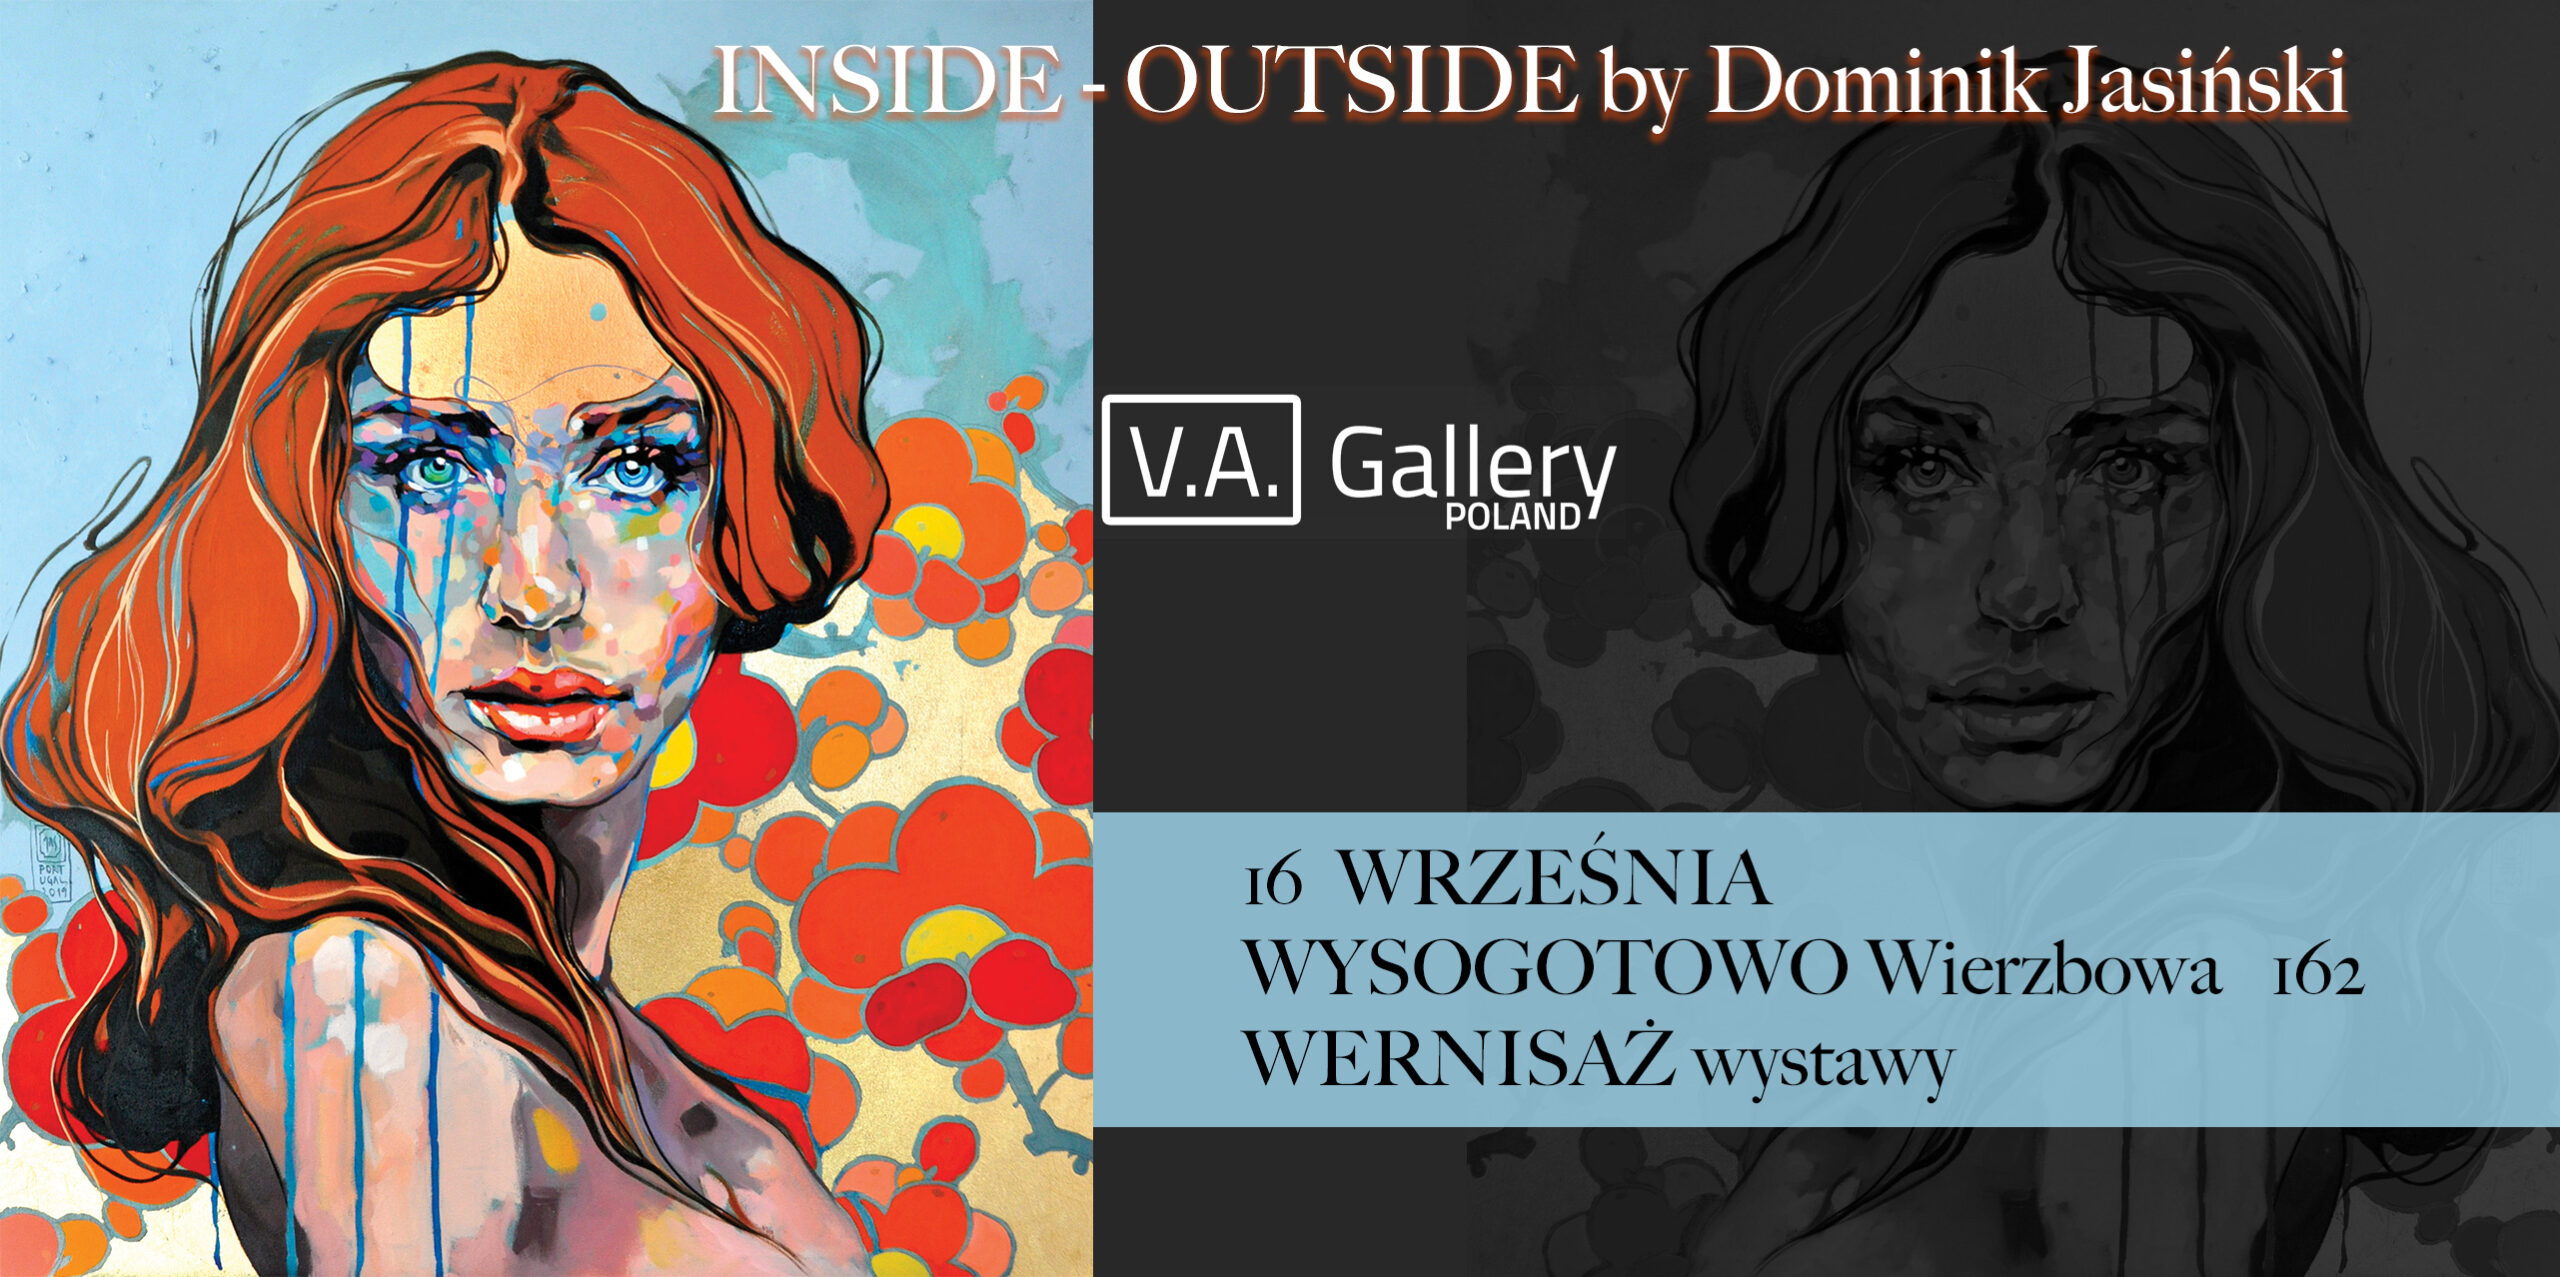 plakat „INSIDE - OUTSIDE” by Dominik Jasiński